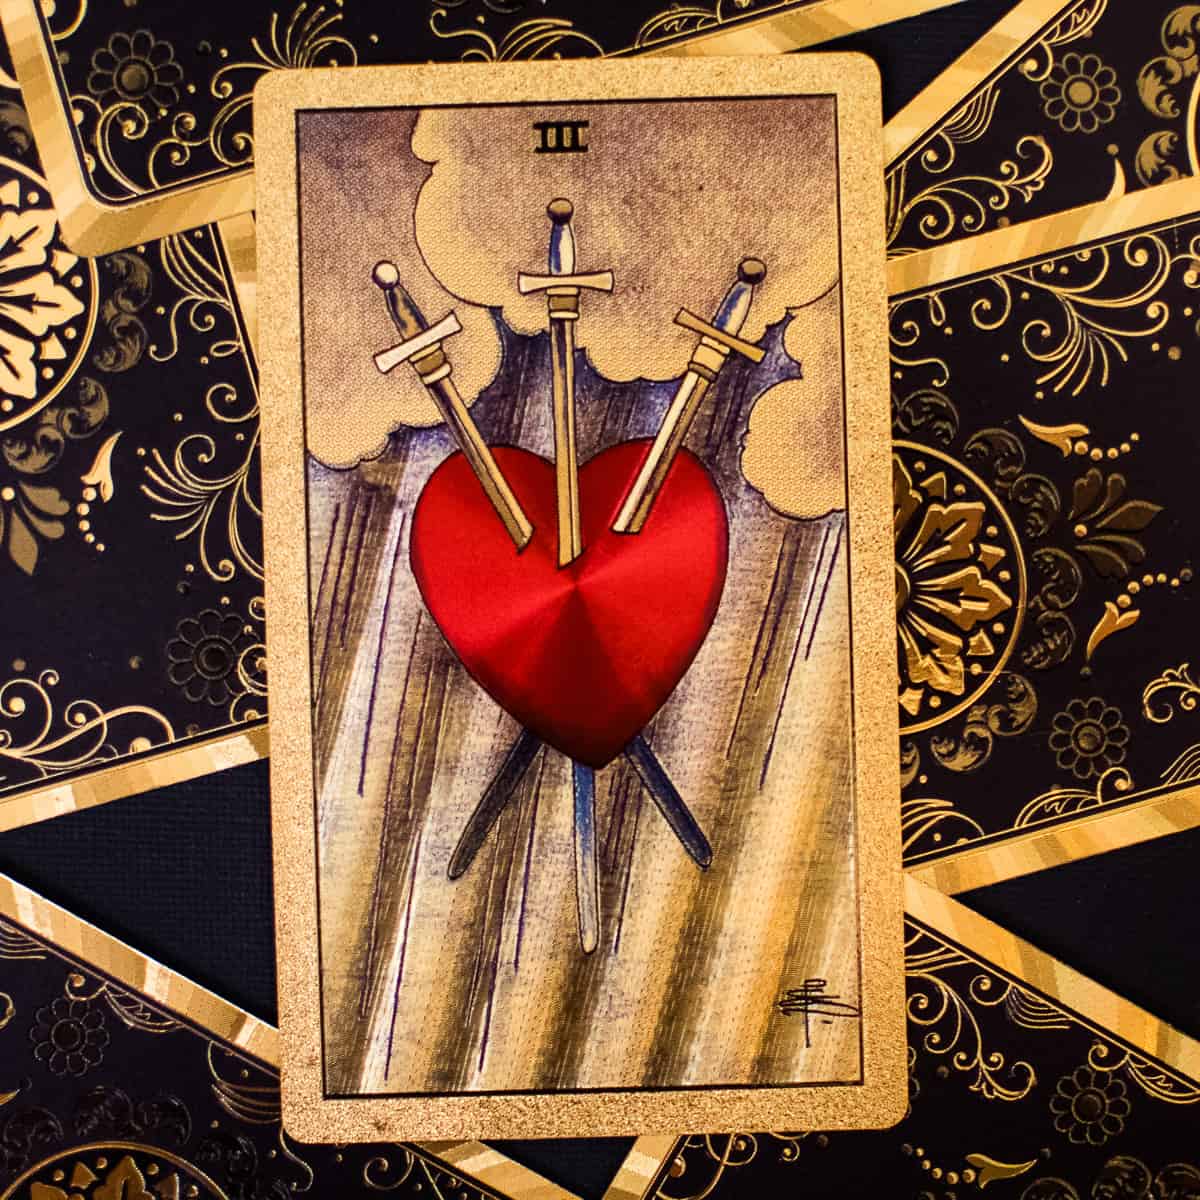 Three swords piercing a hart on a tarot card.